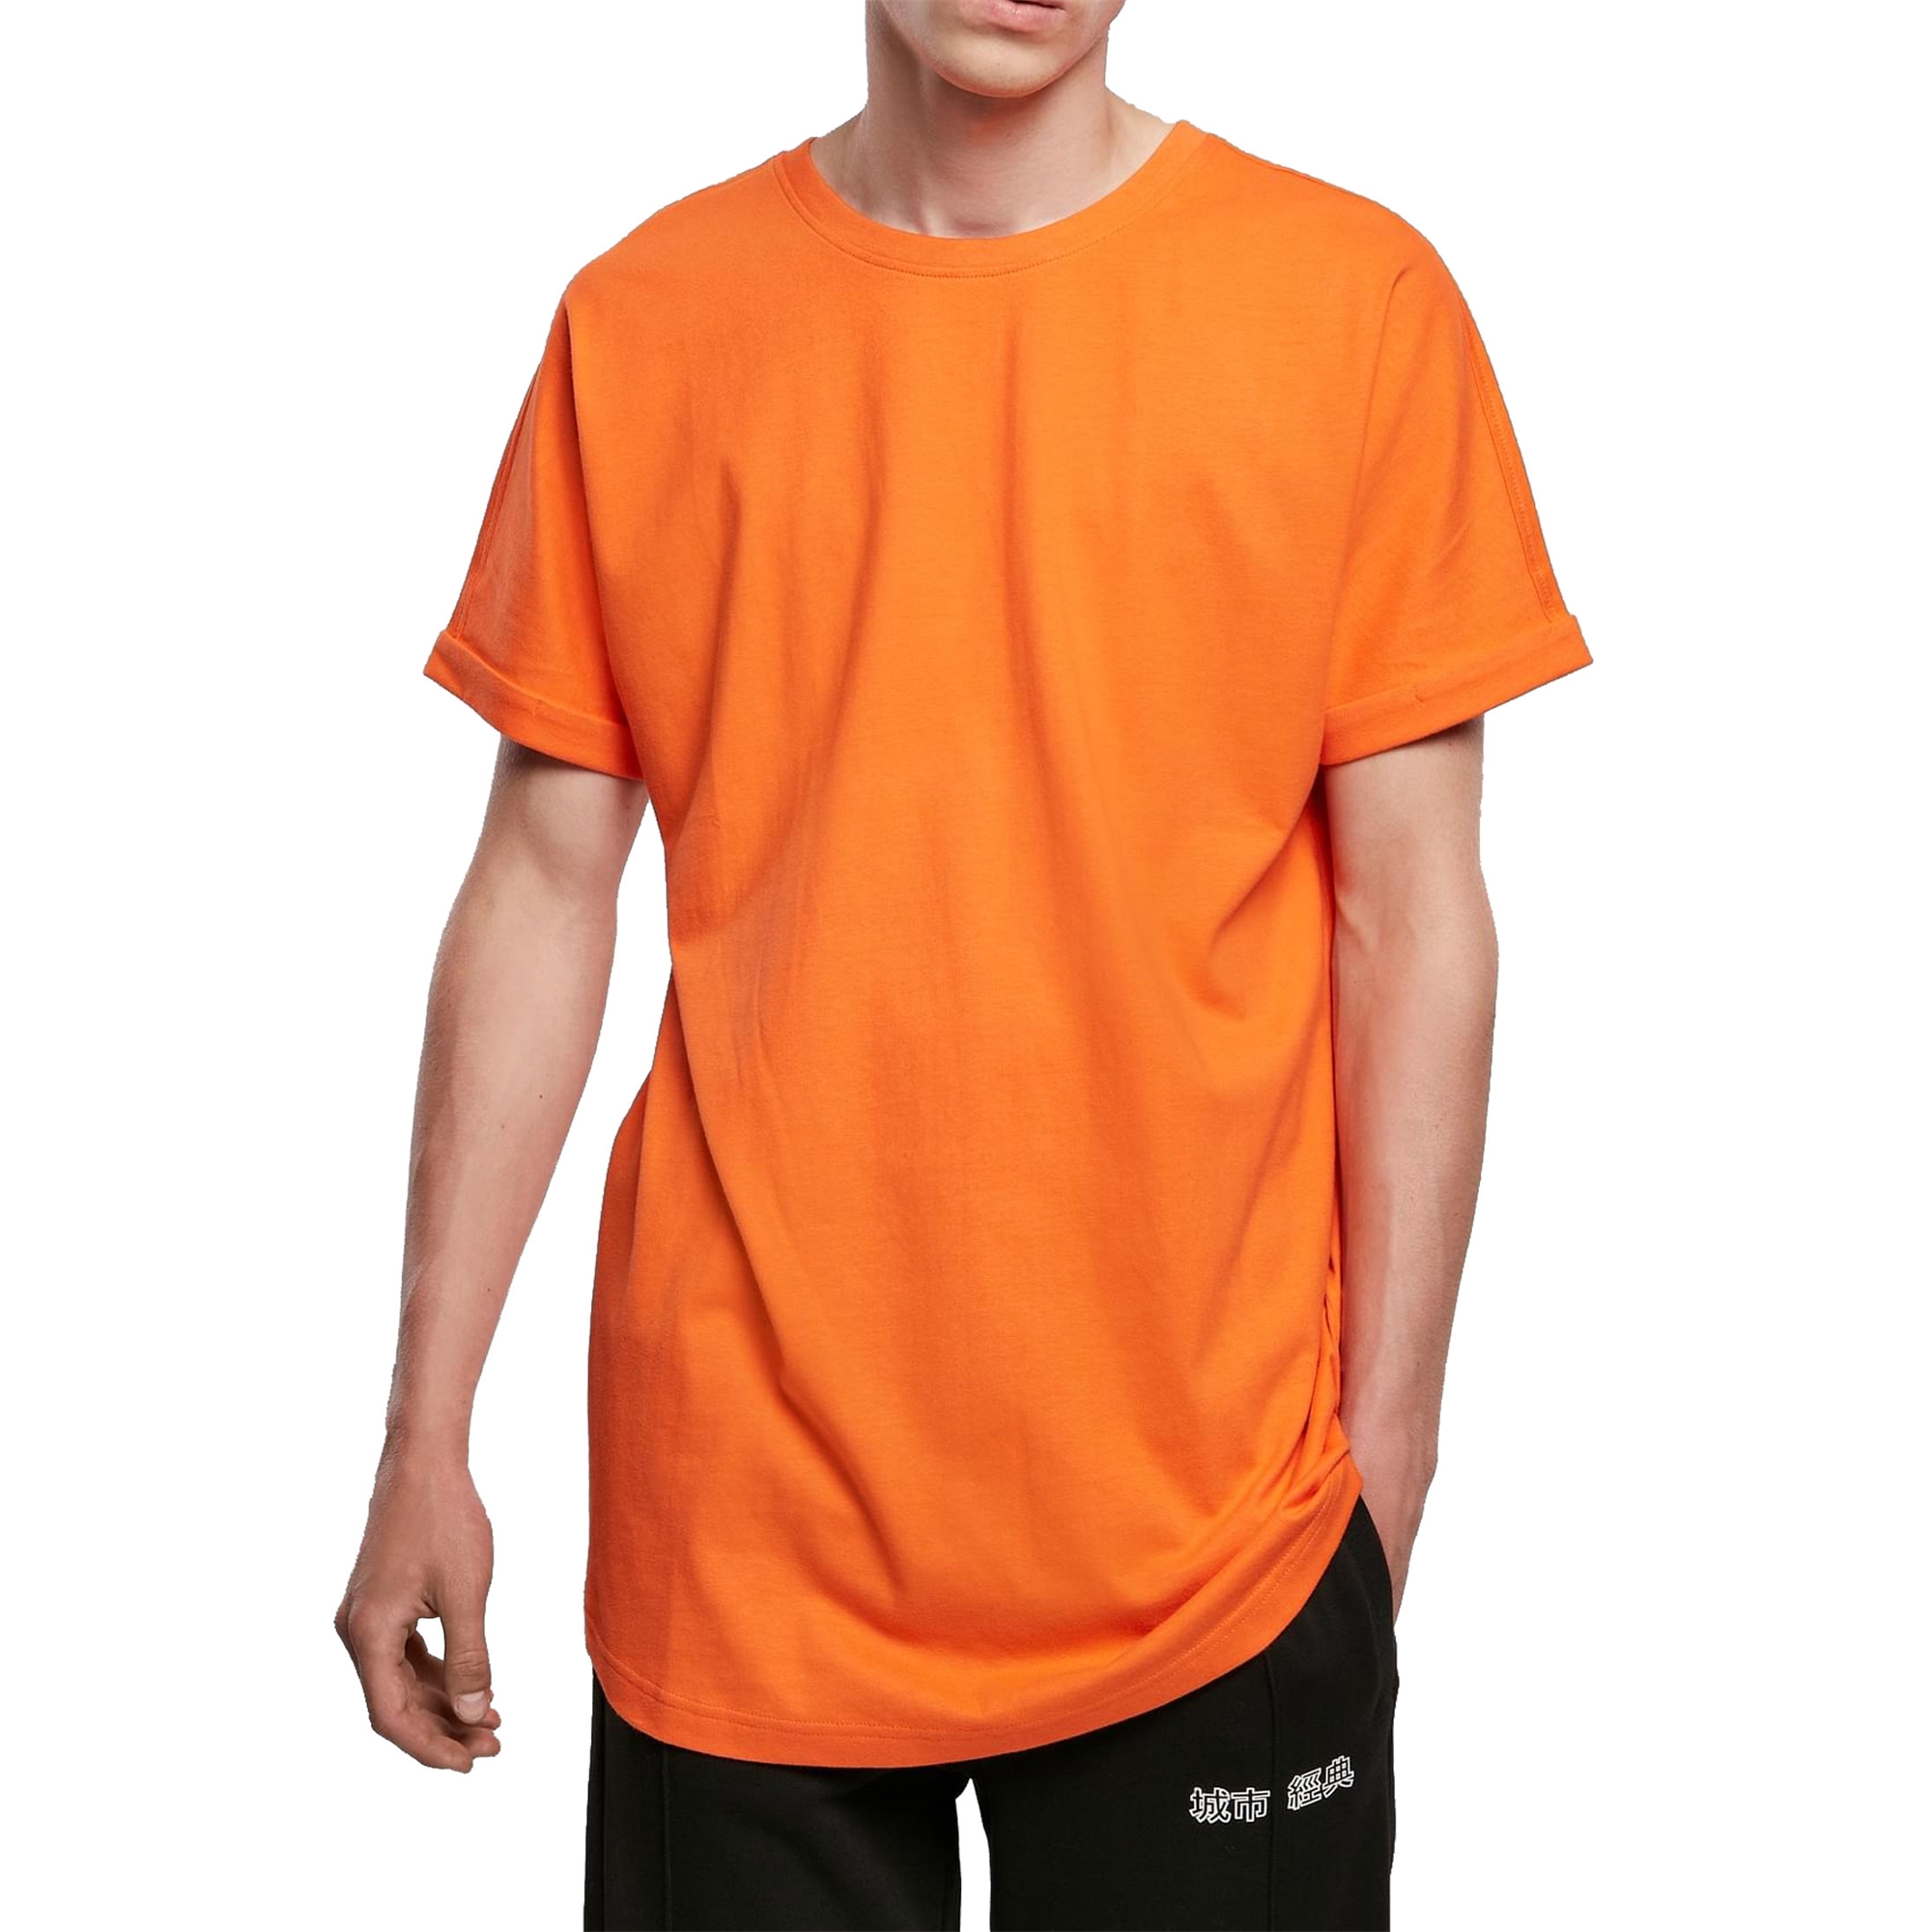 Turnup oversize Shaped extra Long Classics Herren T-Shirt eBay lang Tee Urban | Shirt